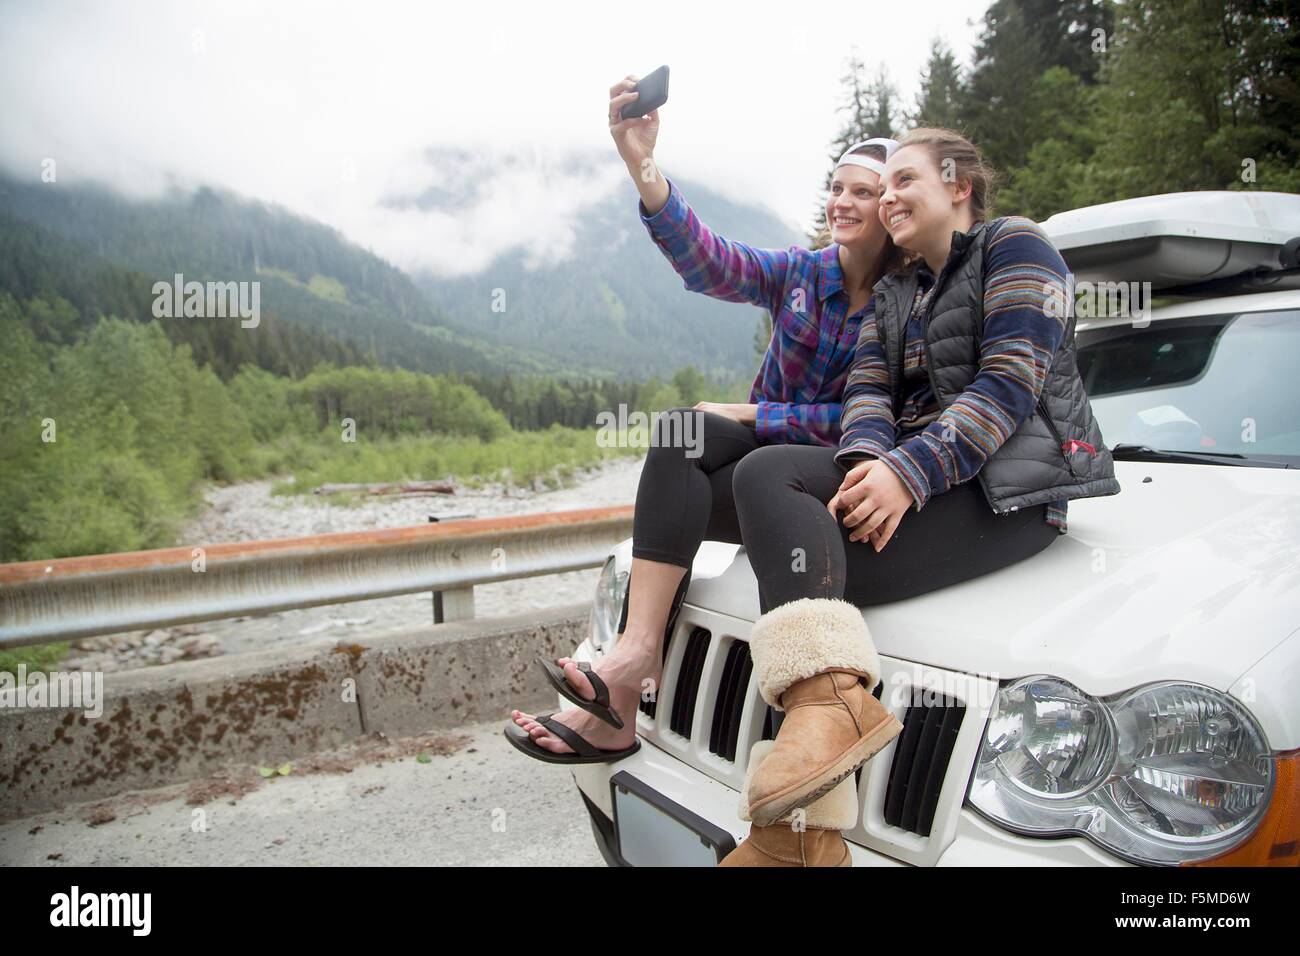 Hikers taking selfie with smartphone on bonnet of vehicle, Lake Blanco, Washington, USA Stock Photo